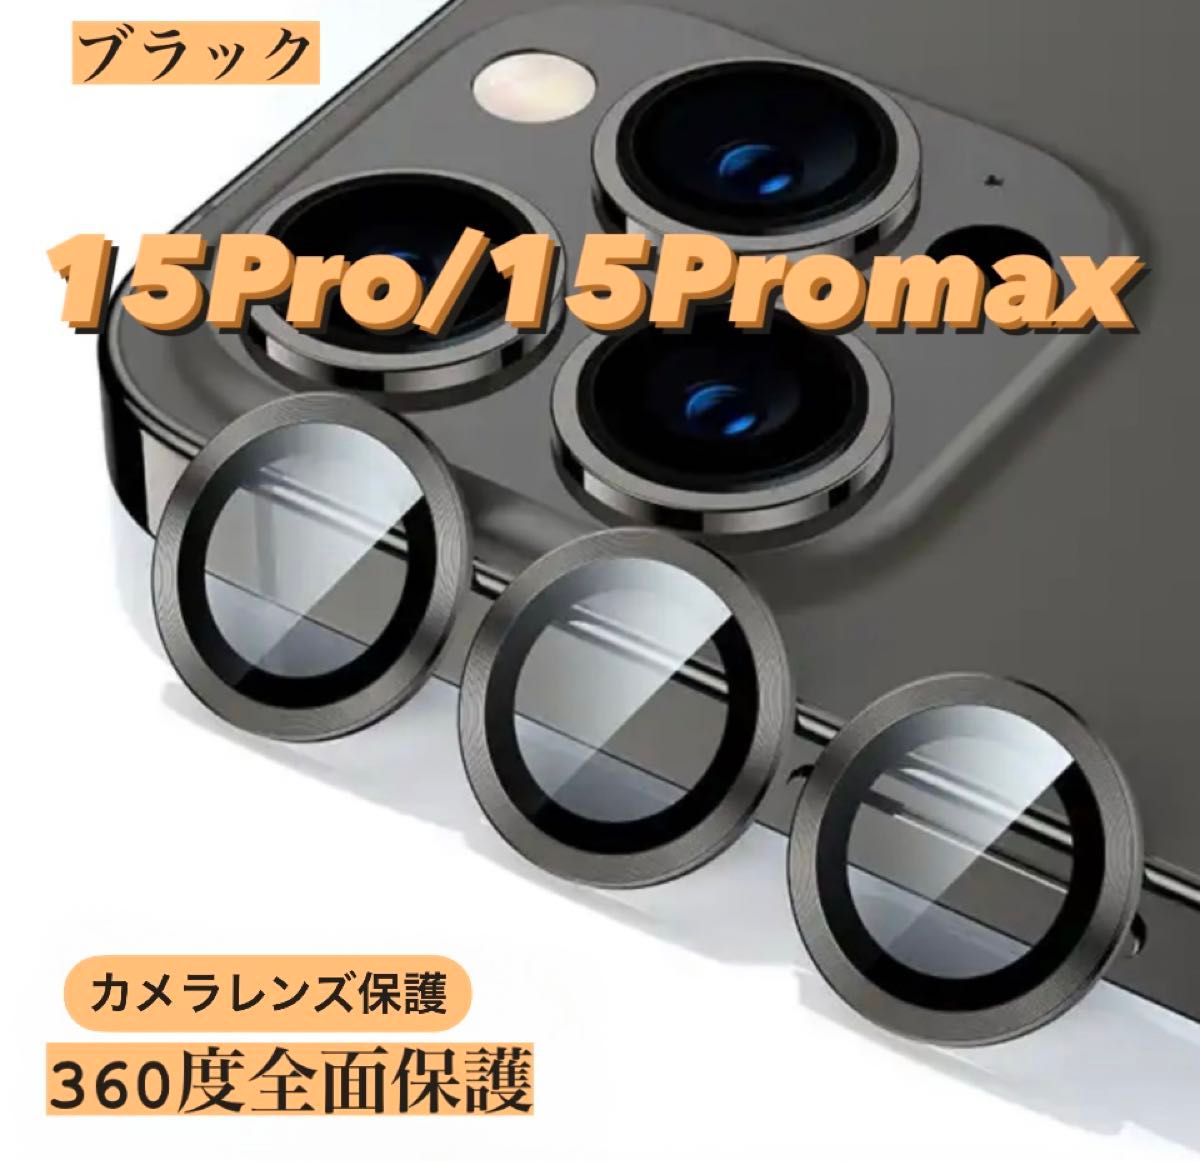 iPhone15Pro/15Promaxカメラ保護フィルム スマホカメラレンズ ガラスレンズ保護カバー 全面保護 ブラック三眼